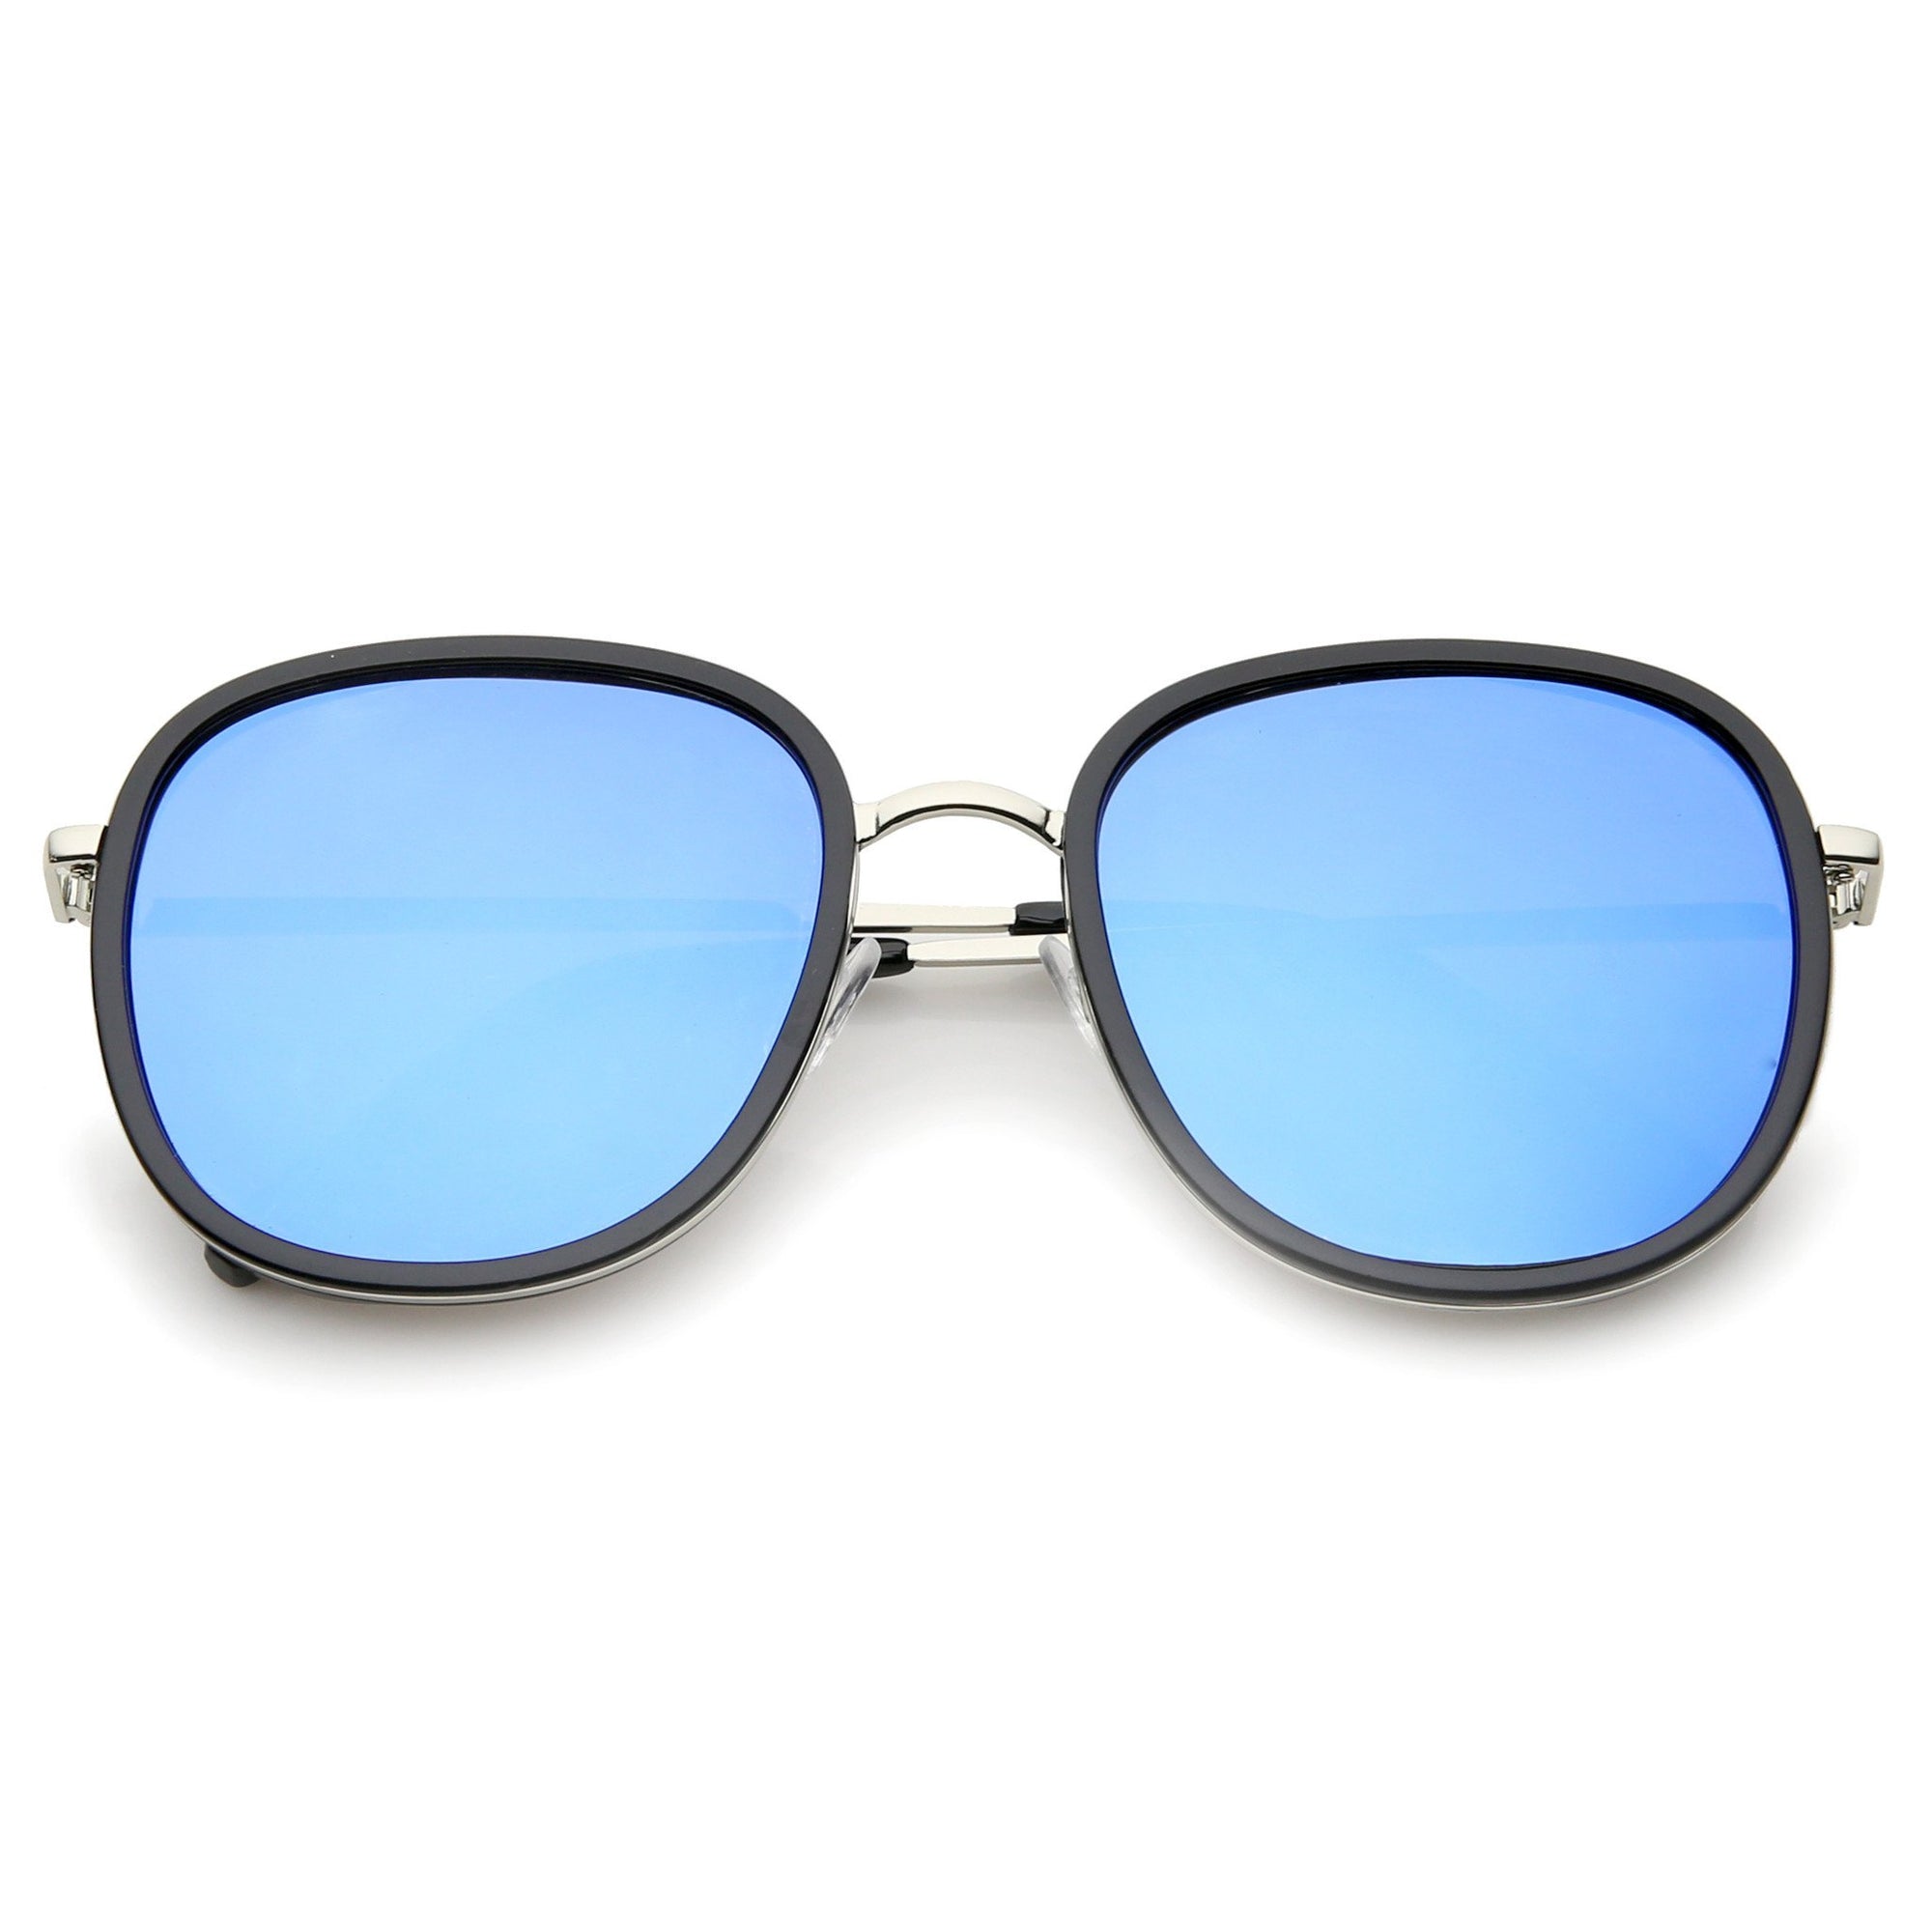 Euro Retro Modern Iridescent Mirror Lens Sunglasses - zeroUV